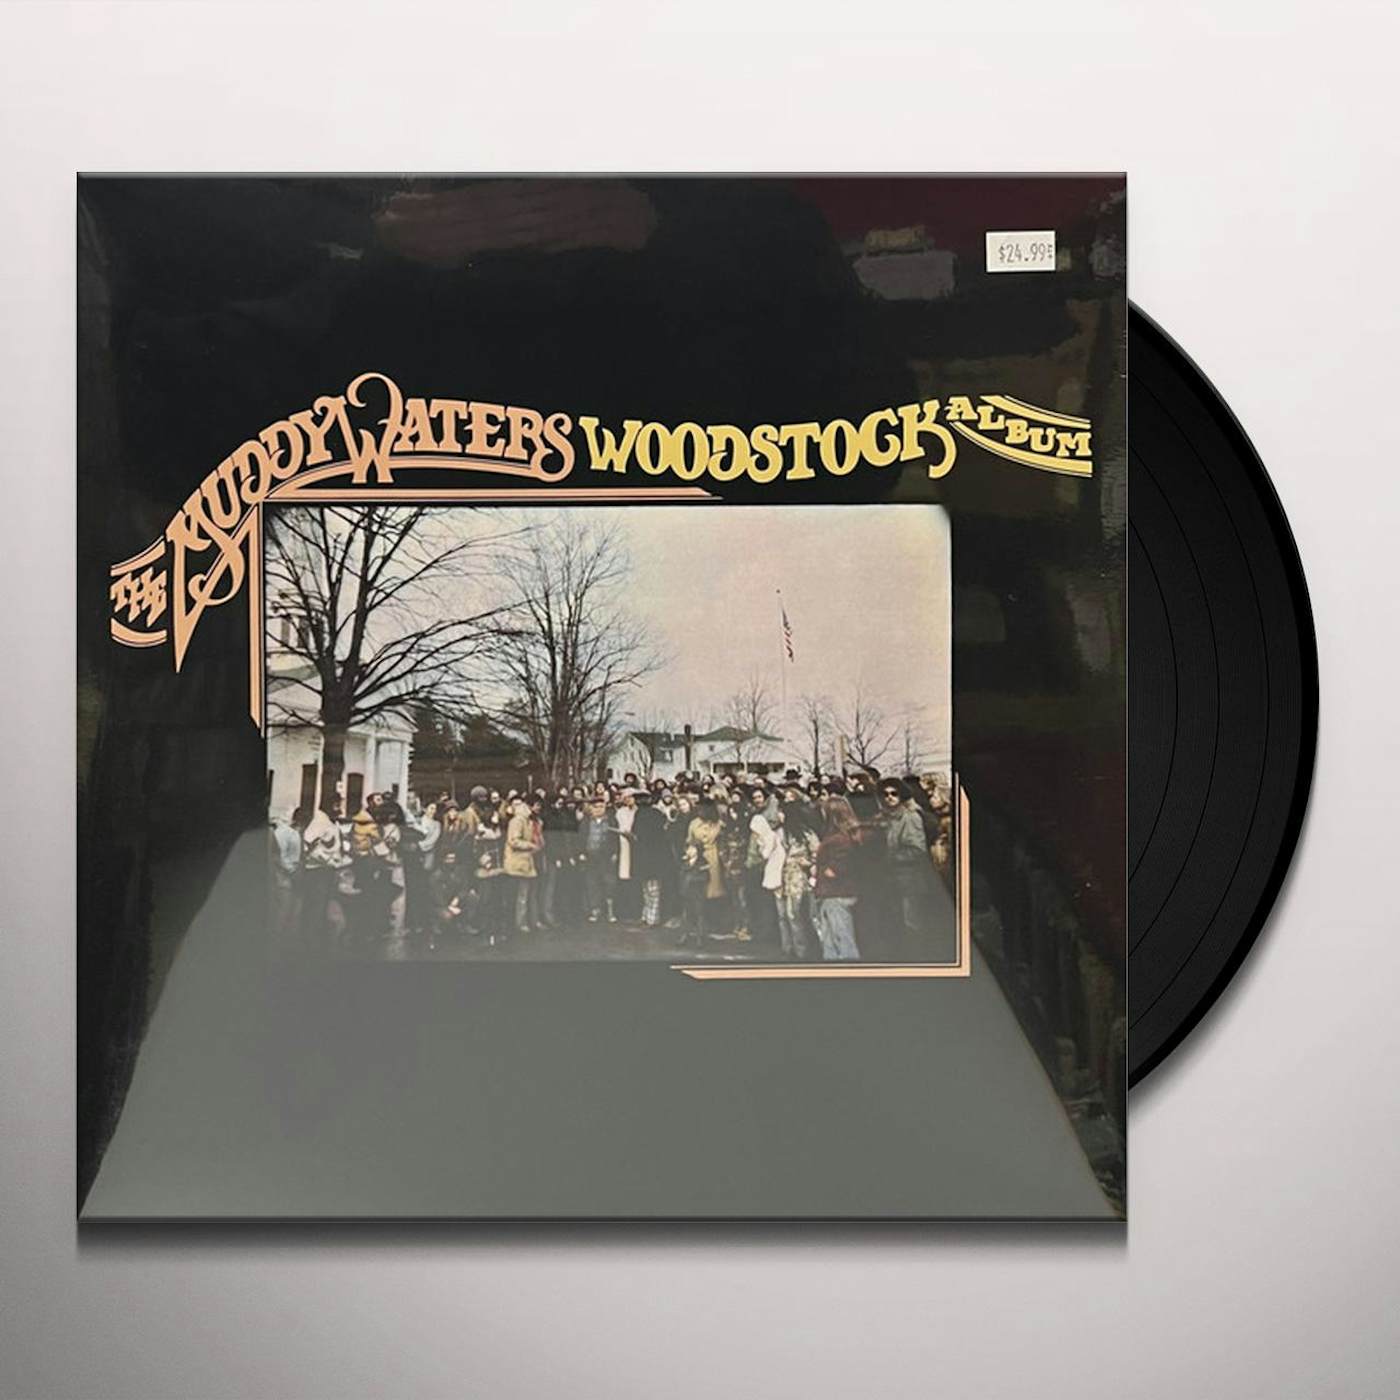 MUDDY WATERS WOODSTOCK ALBUM Vinyl Record